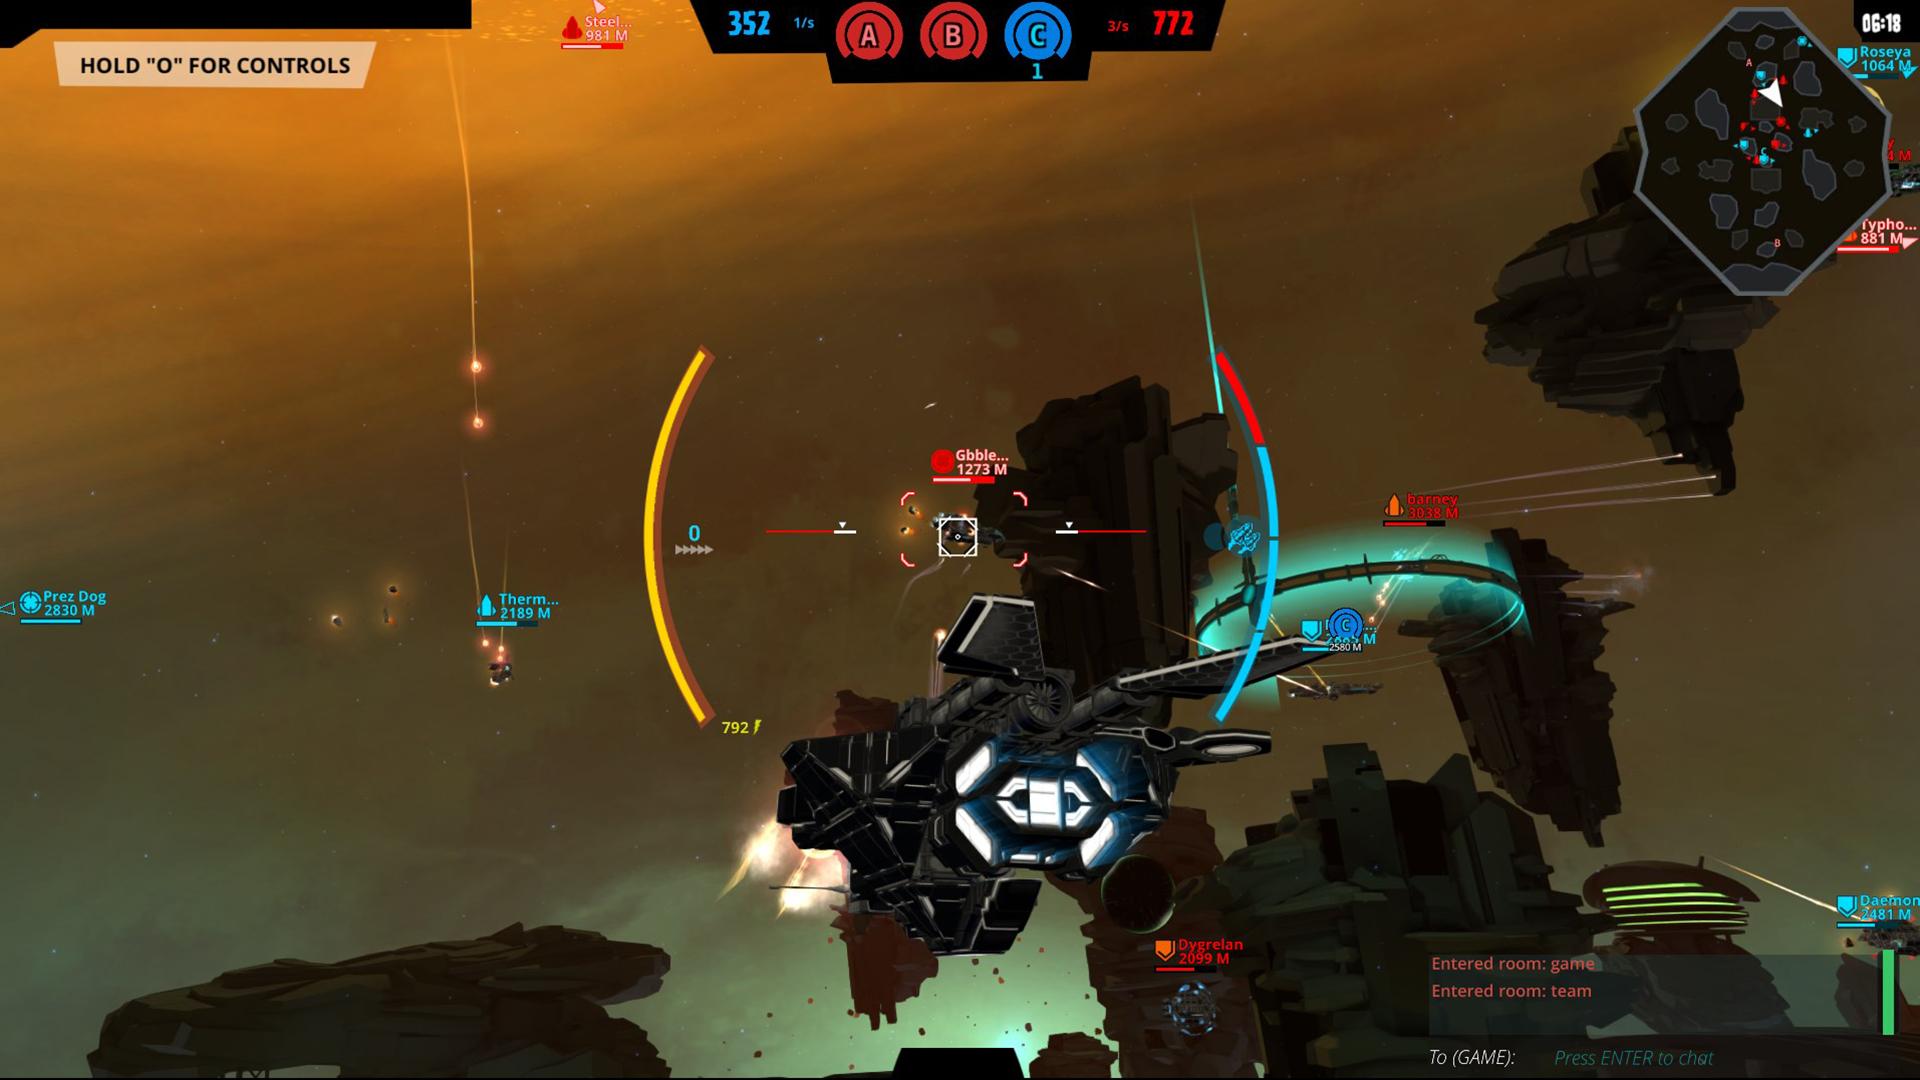 Screenshot №7 from game Galactic Junk League